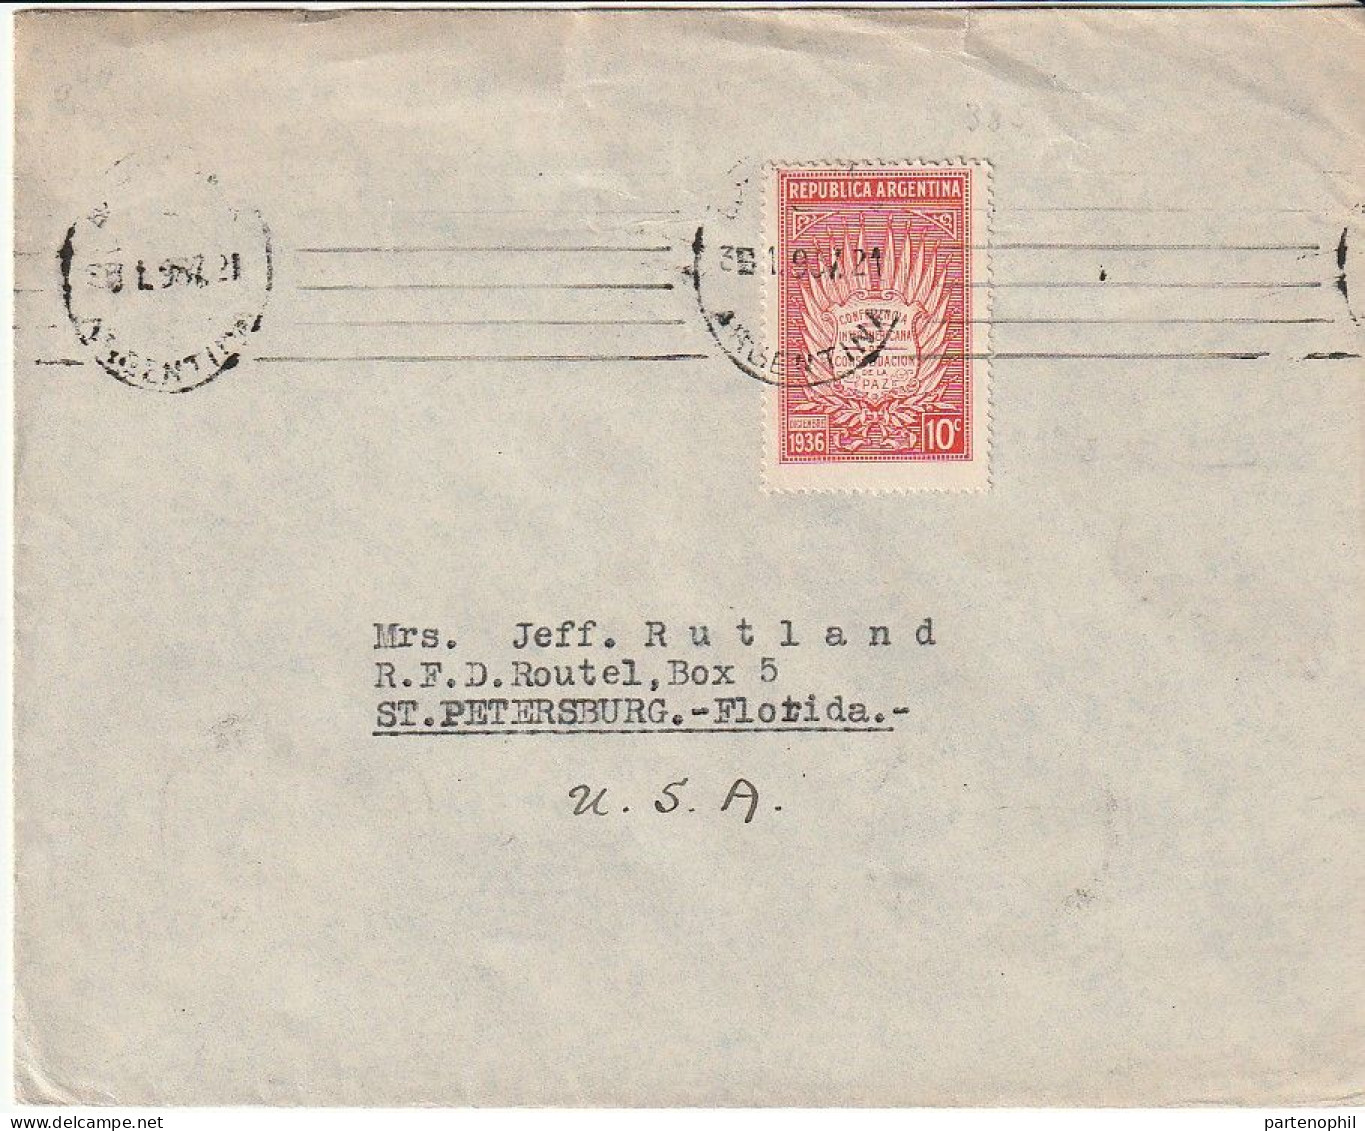 Republica Argentina Argentinien 1937 -  Postgeschichte - Storia Postale - Histoire Postale - Lettres & Documents